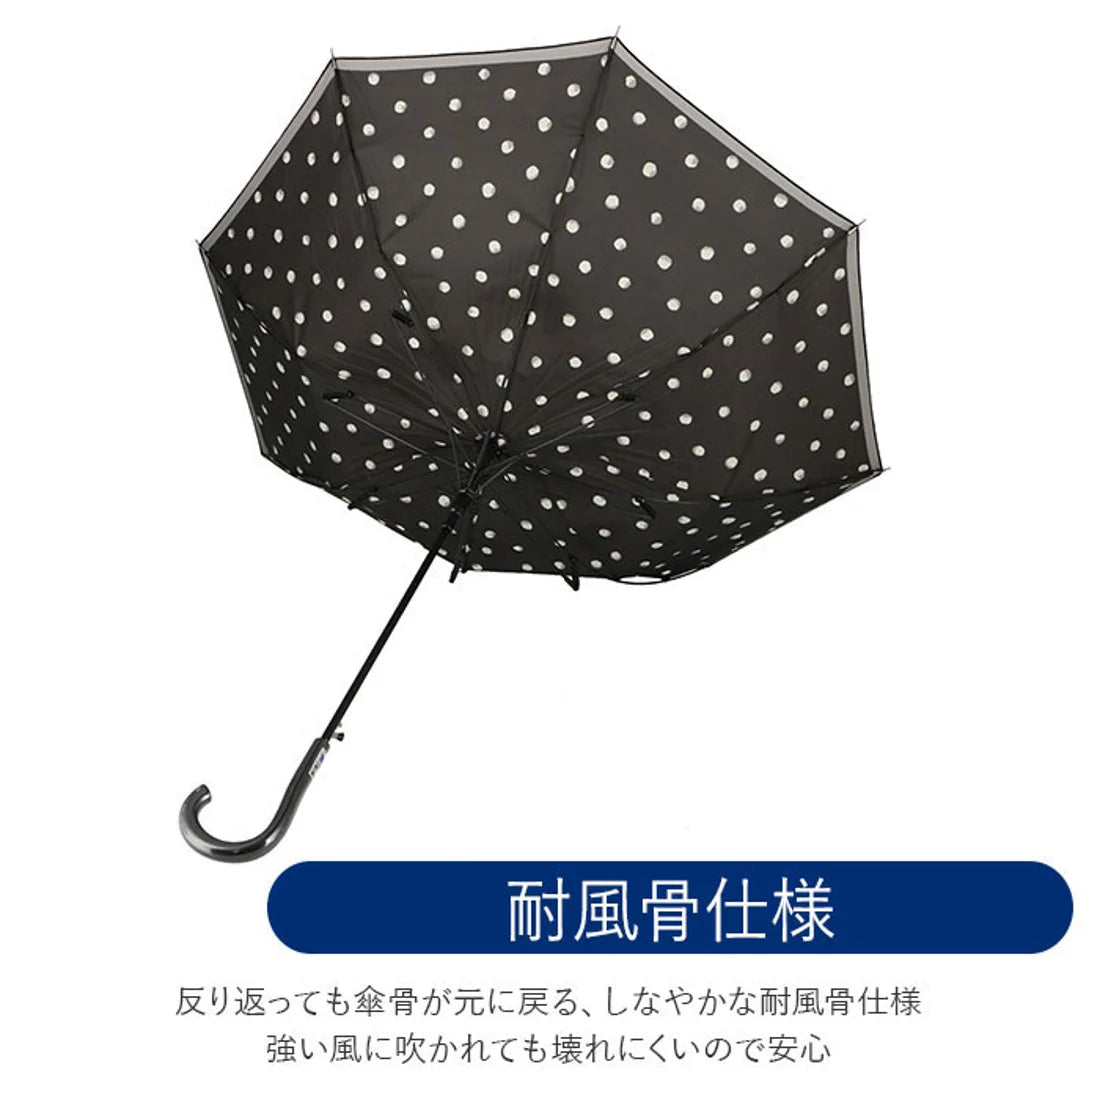 Miyajima 耐风雨伞 直伞60cm 5种款式可选